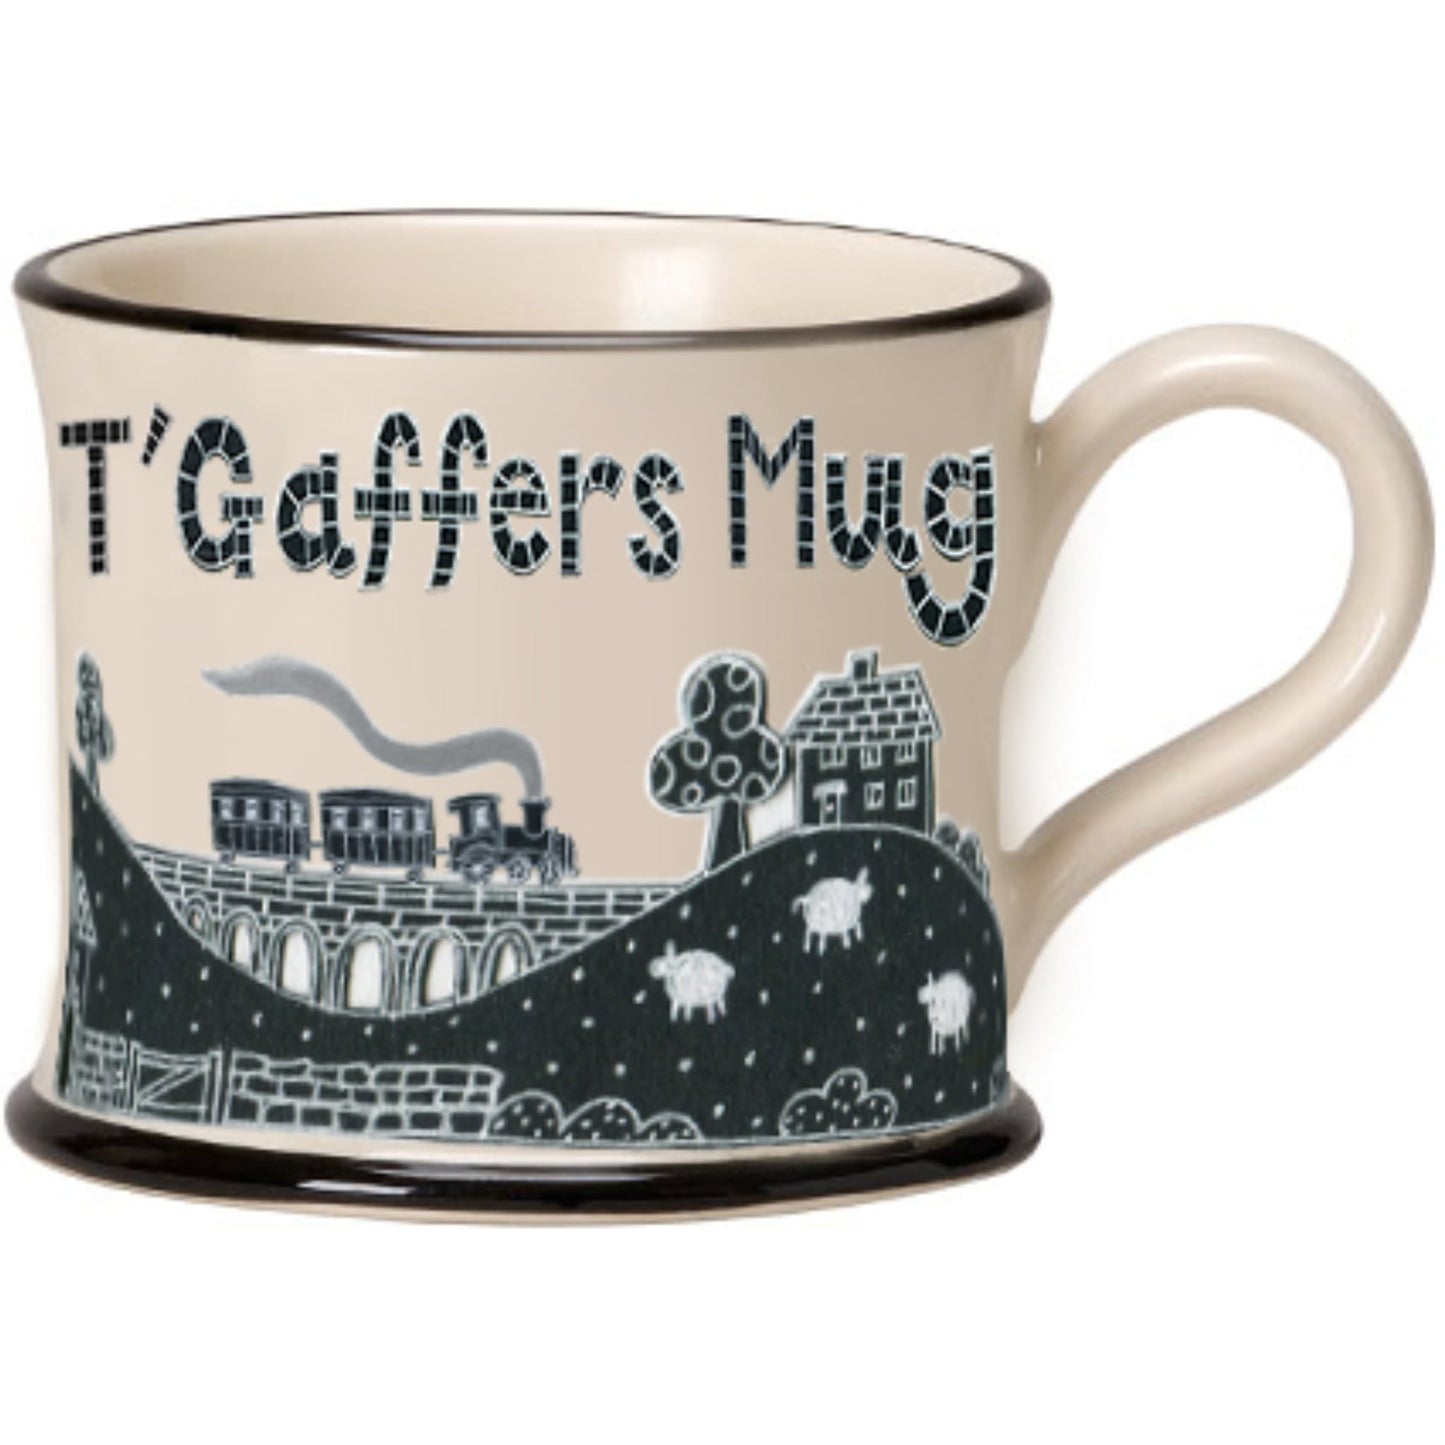 T'Gaffers Mug - The Great Yorkshire Shop